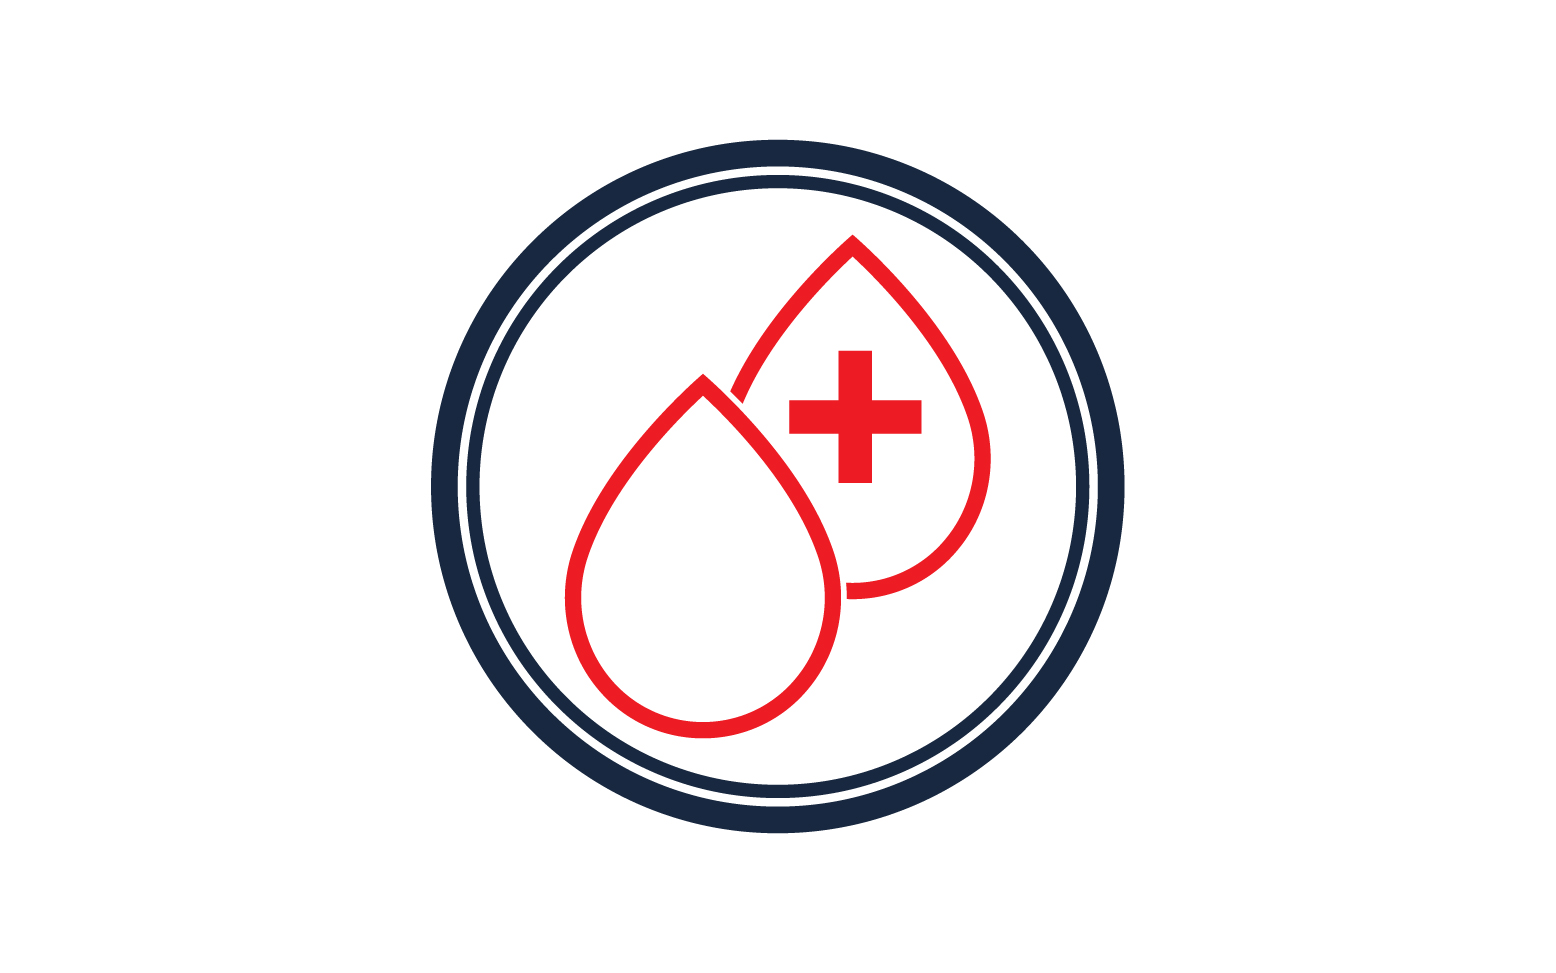 Blood drop icon logo template version v22